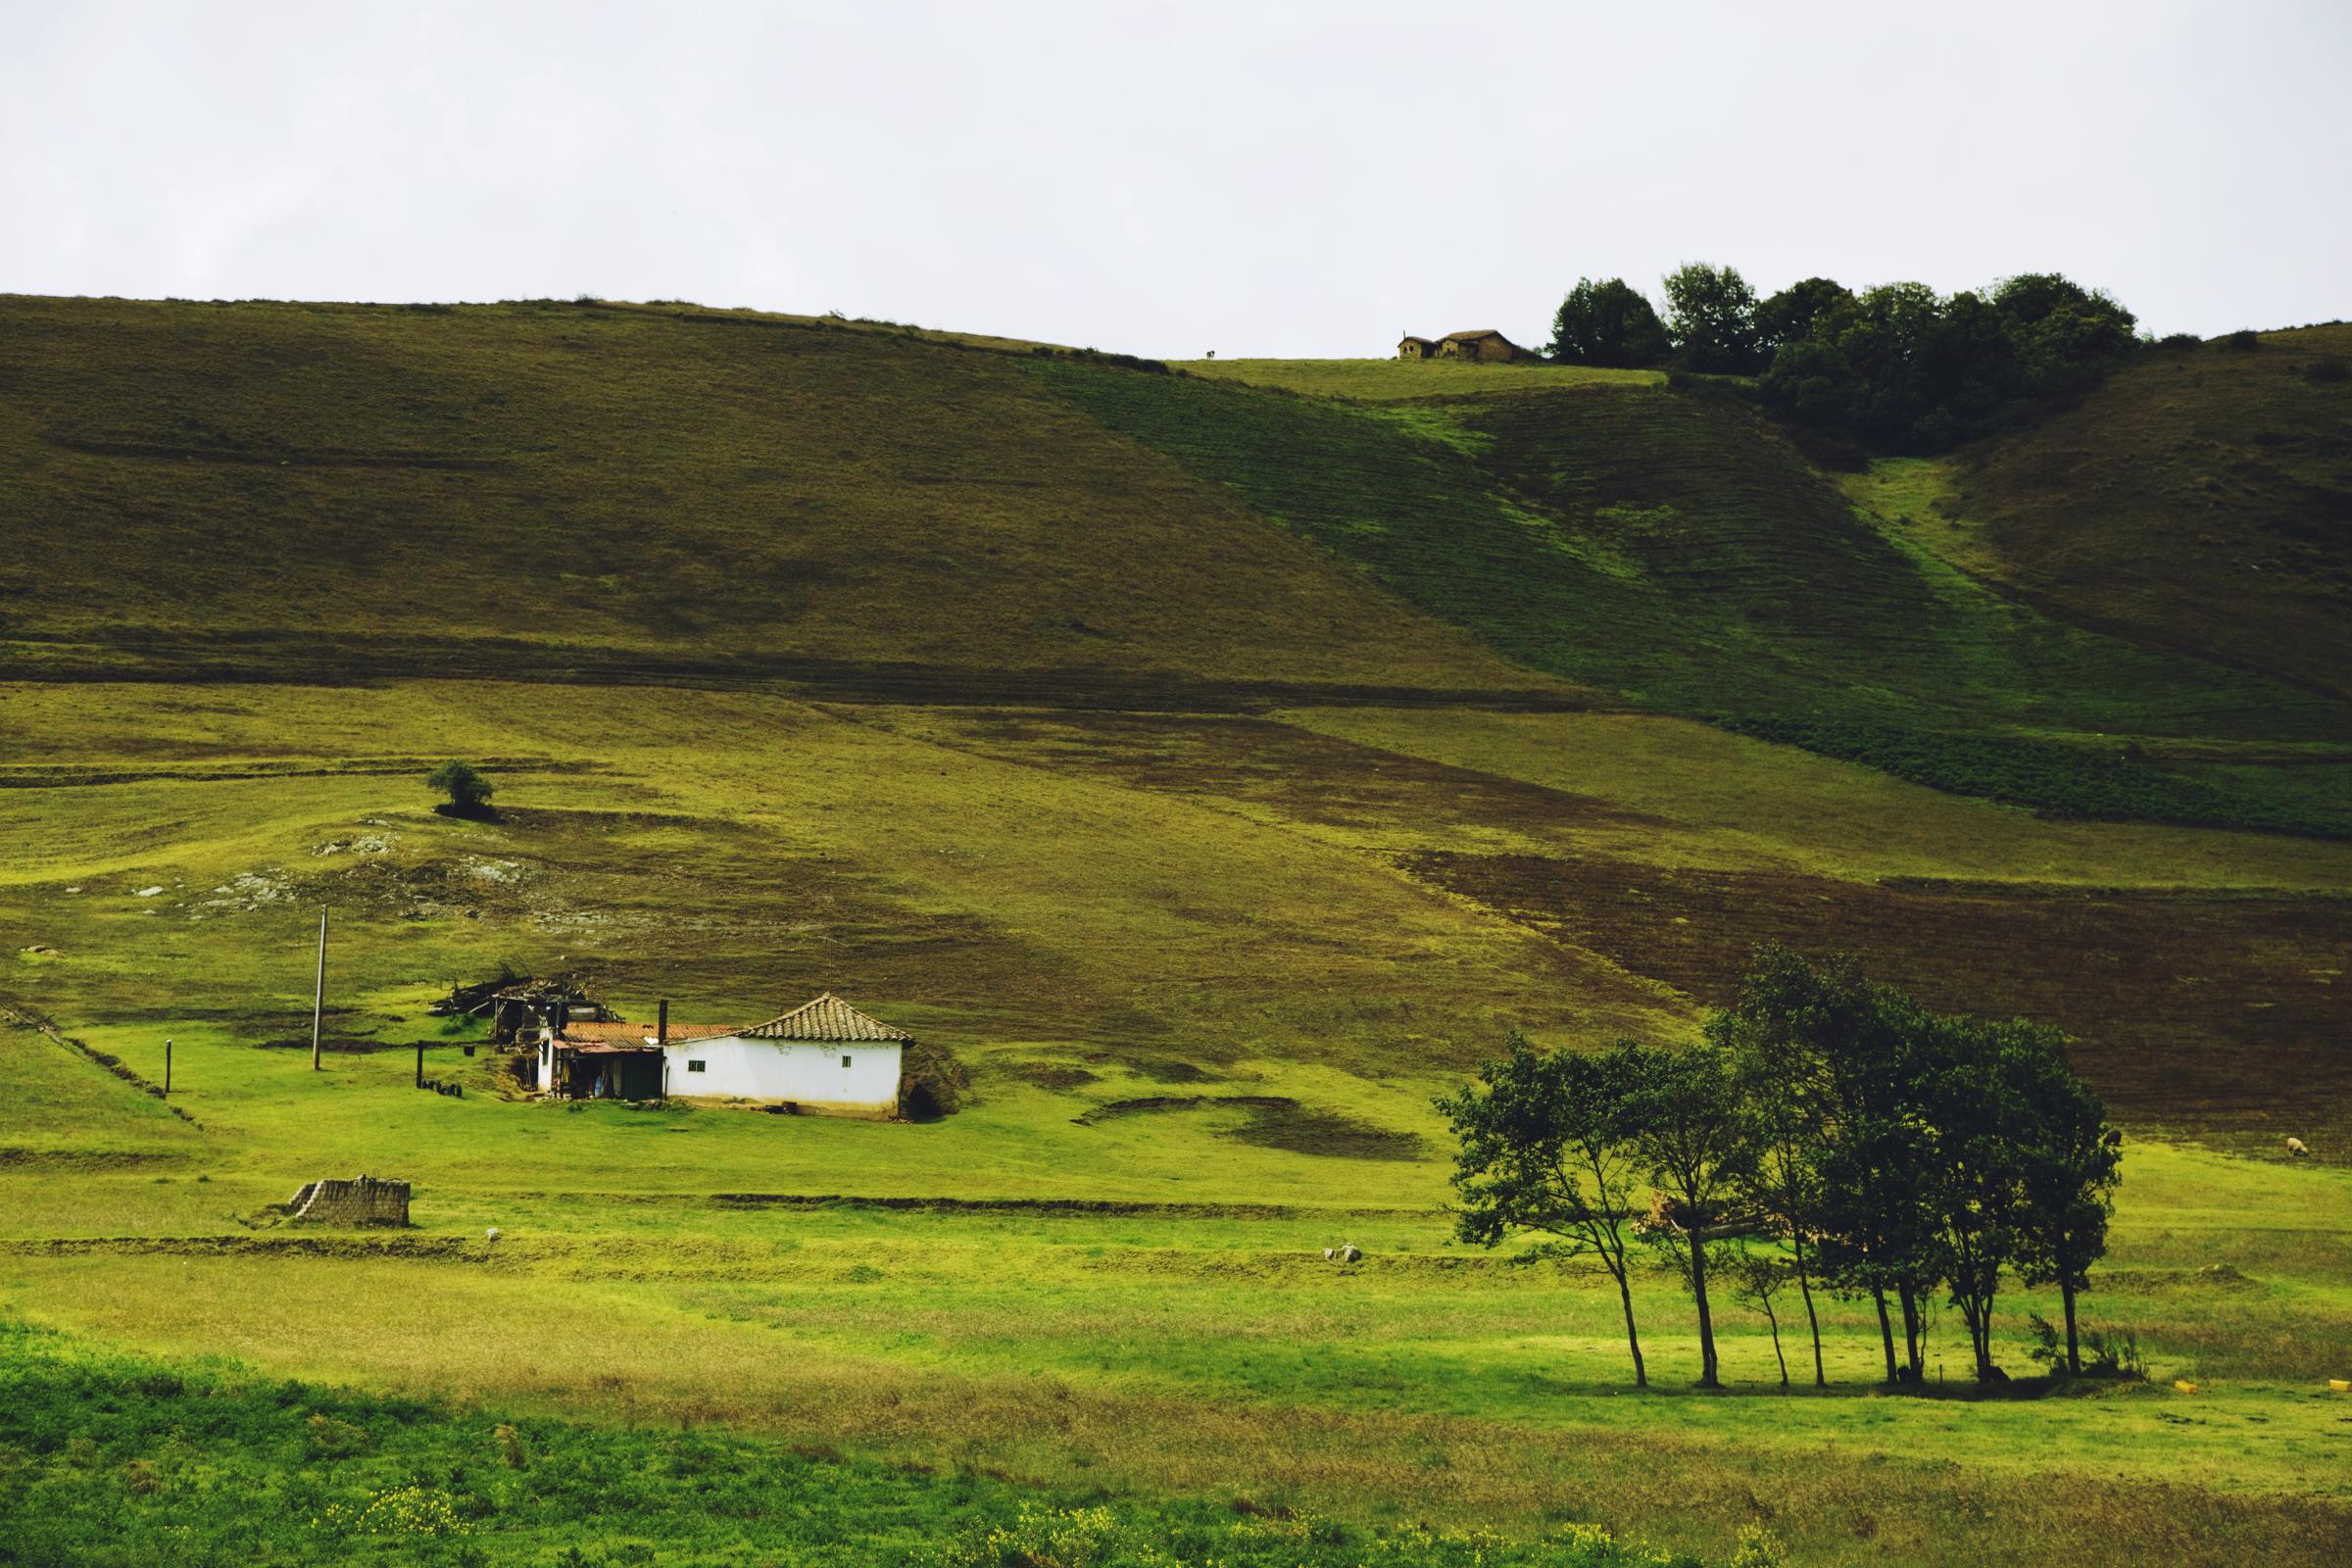 Boyacá - Rural area in Aquitania, Boyacá, Colombia. ©...